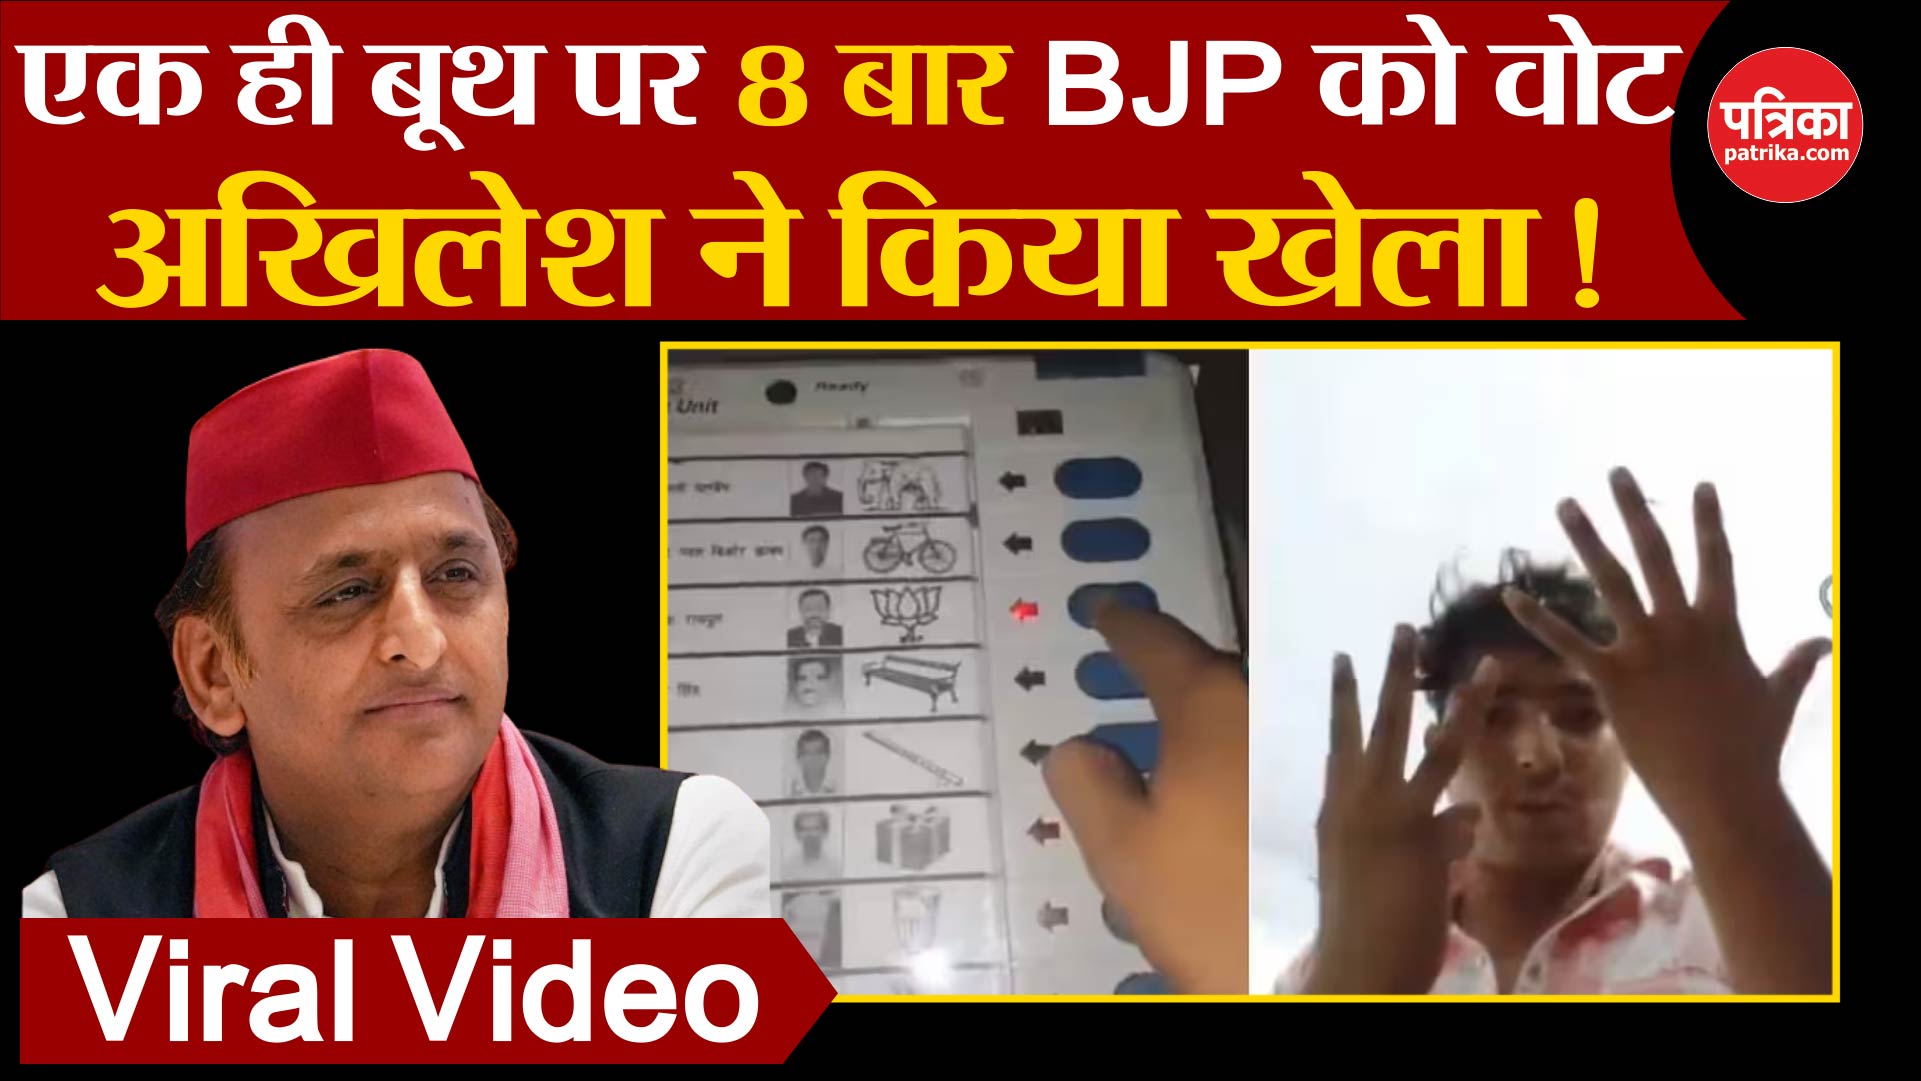 Farrukhabad Viral Video: एक ही बूथ पर 8 बार BJP को वोट